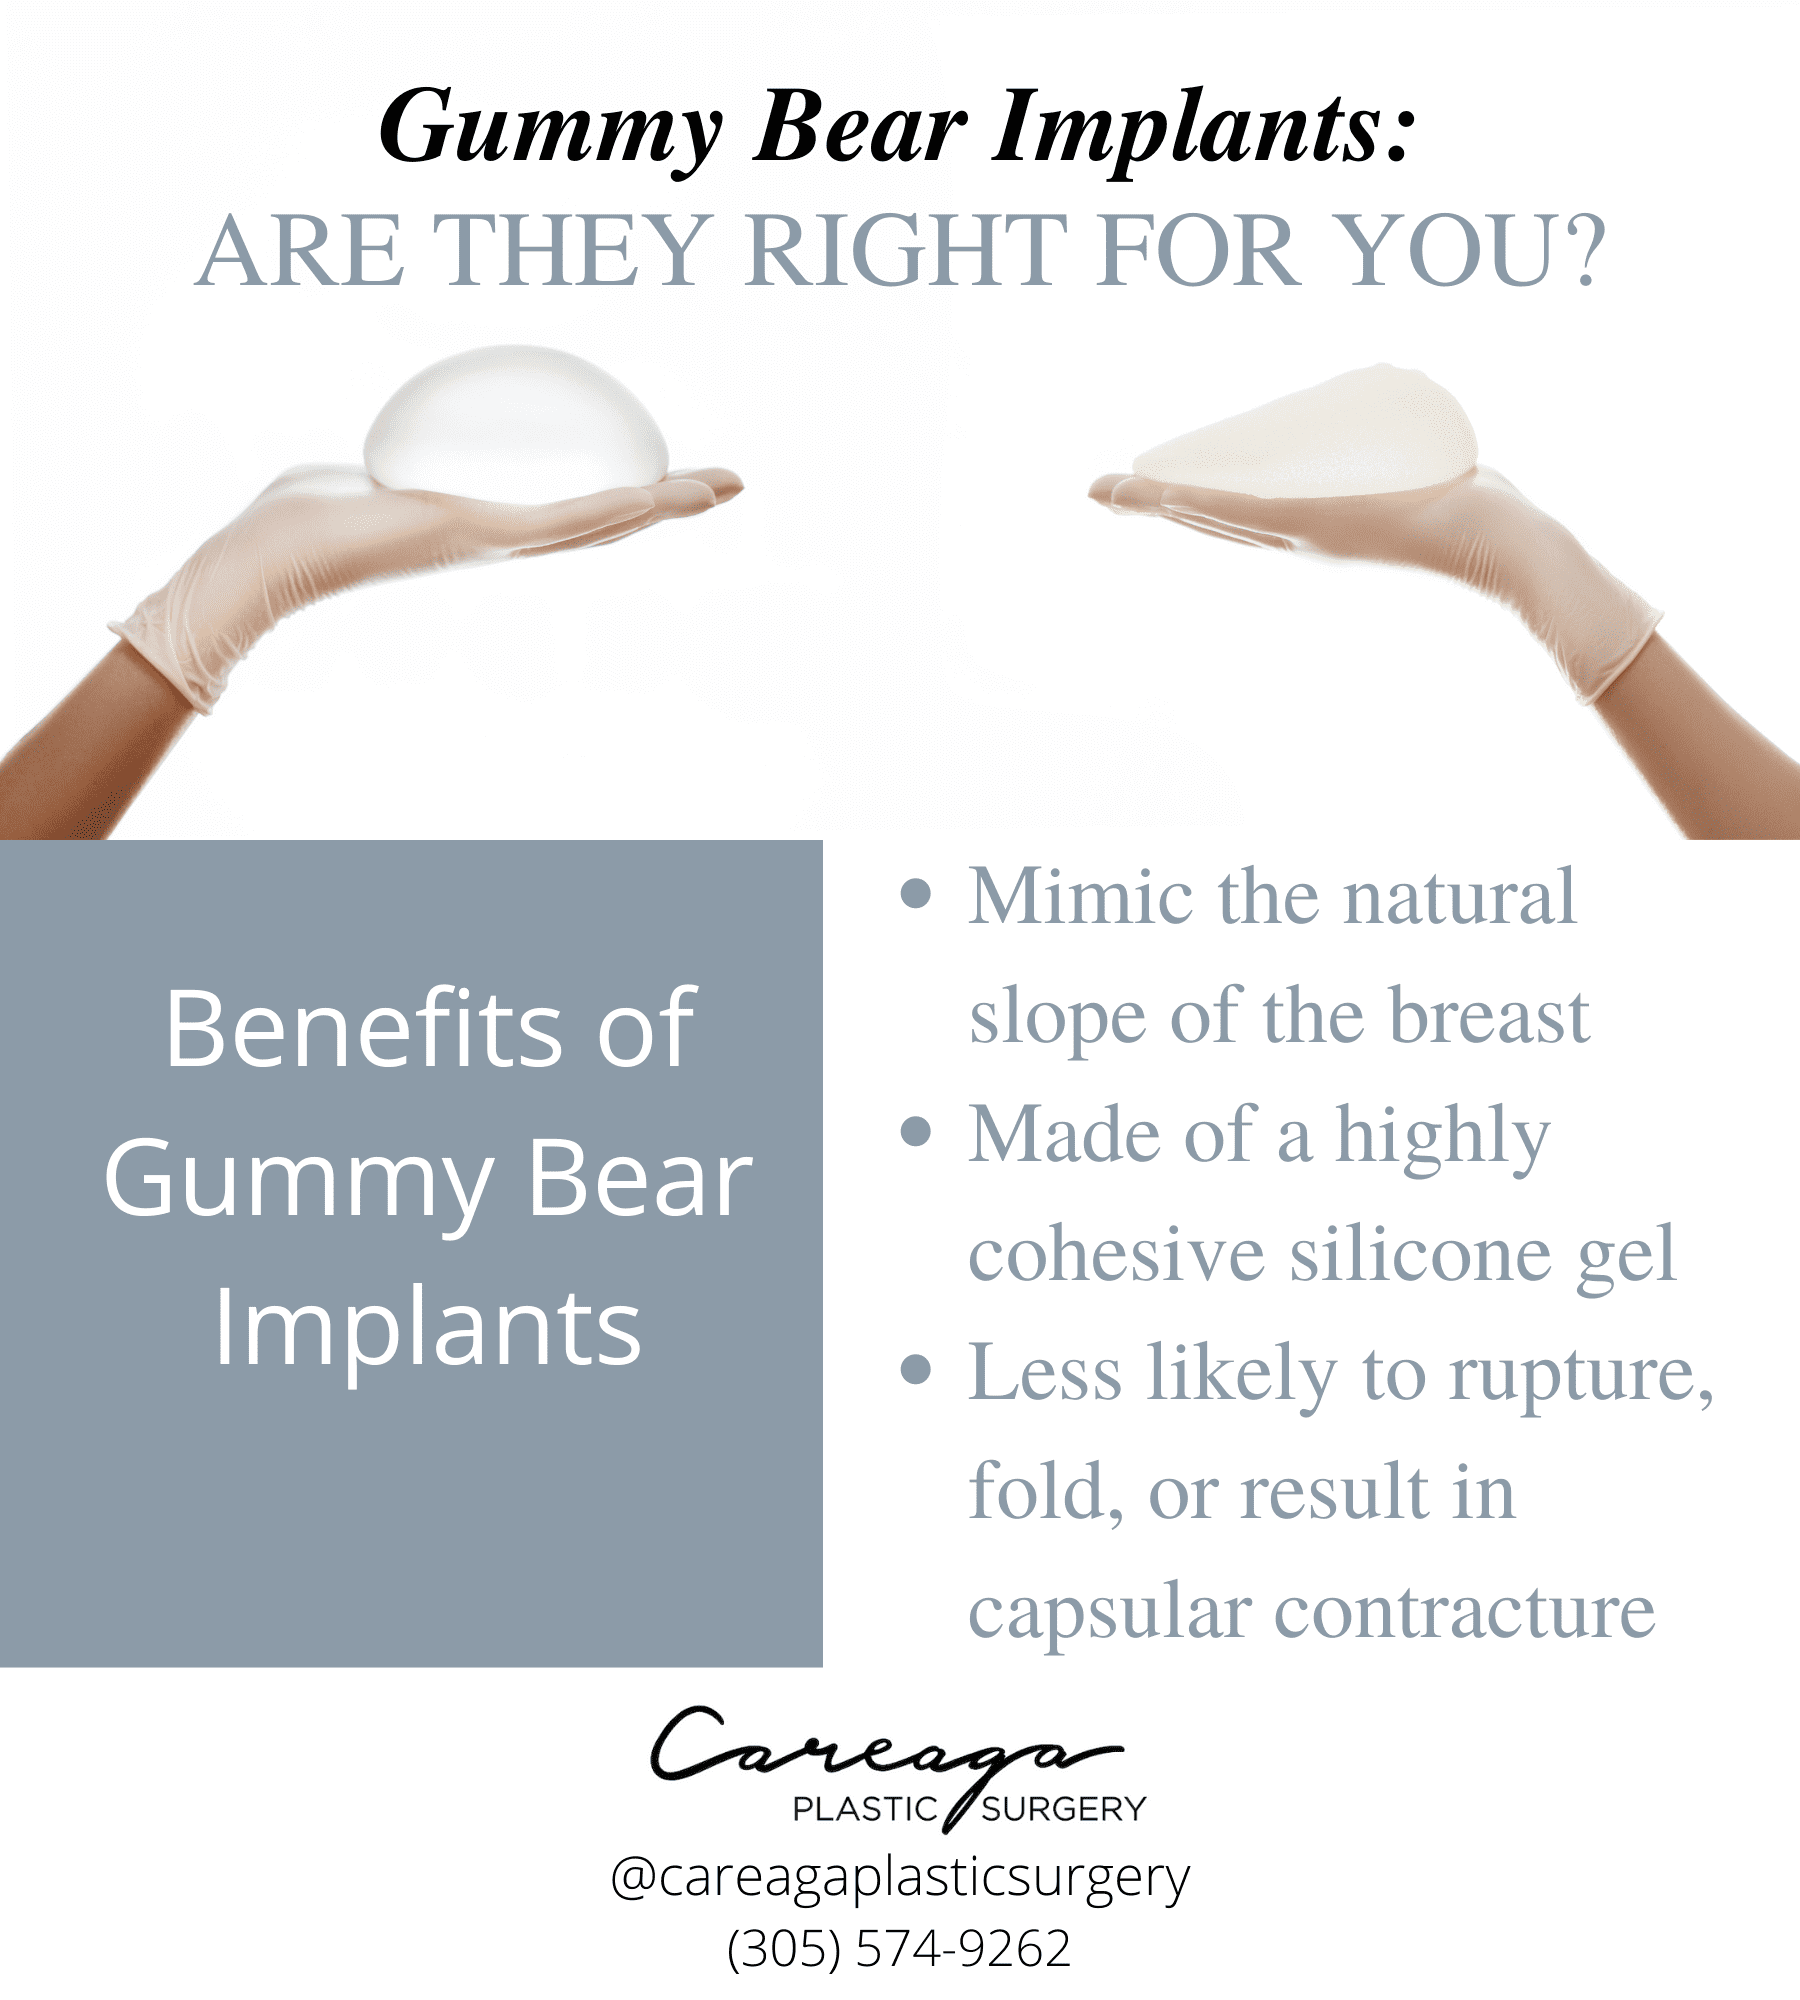 Breast Augmentation With Gummy Bear Breast Implants!